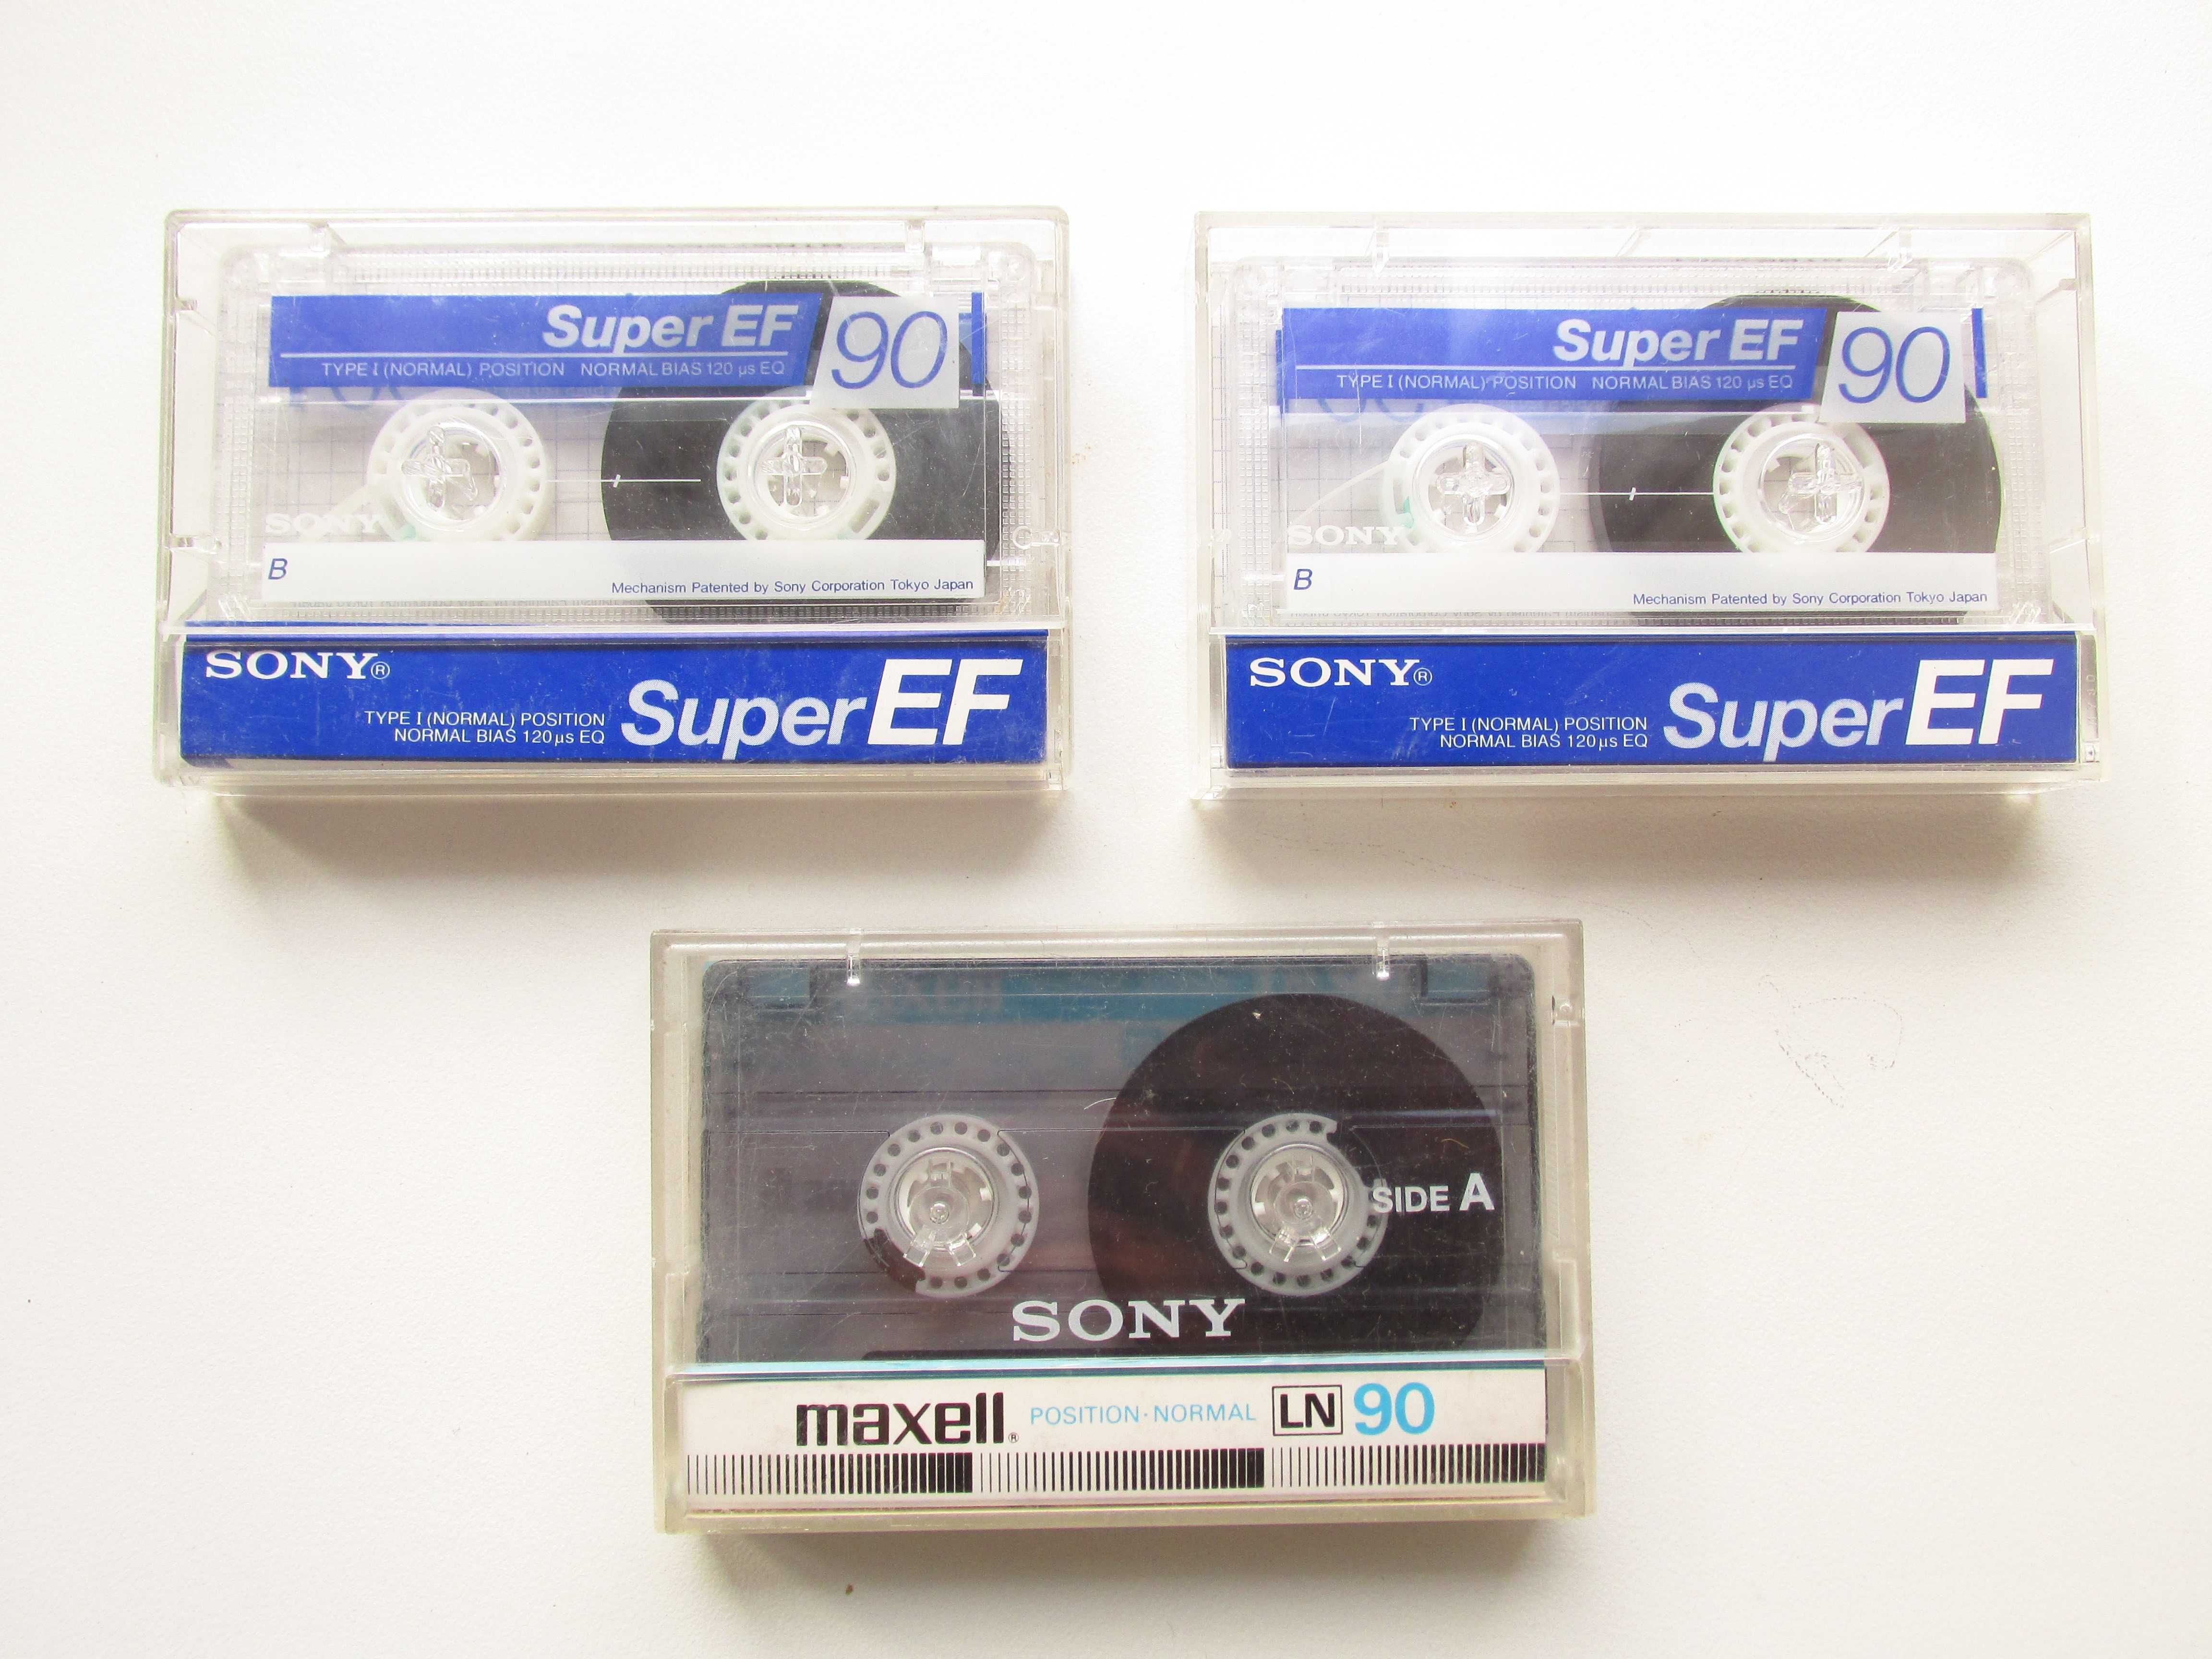 SONY аудио кассеты, аудиокассеты, кассеты магнитофонные